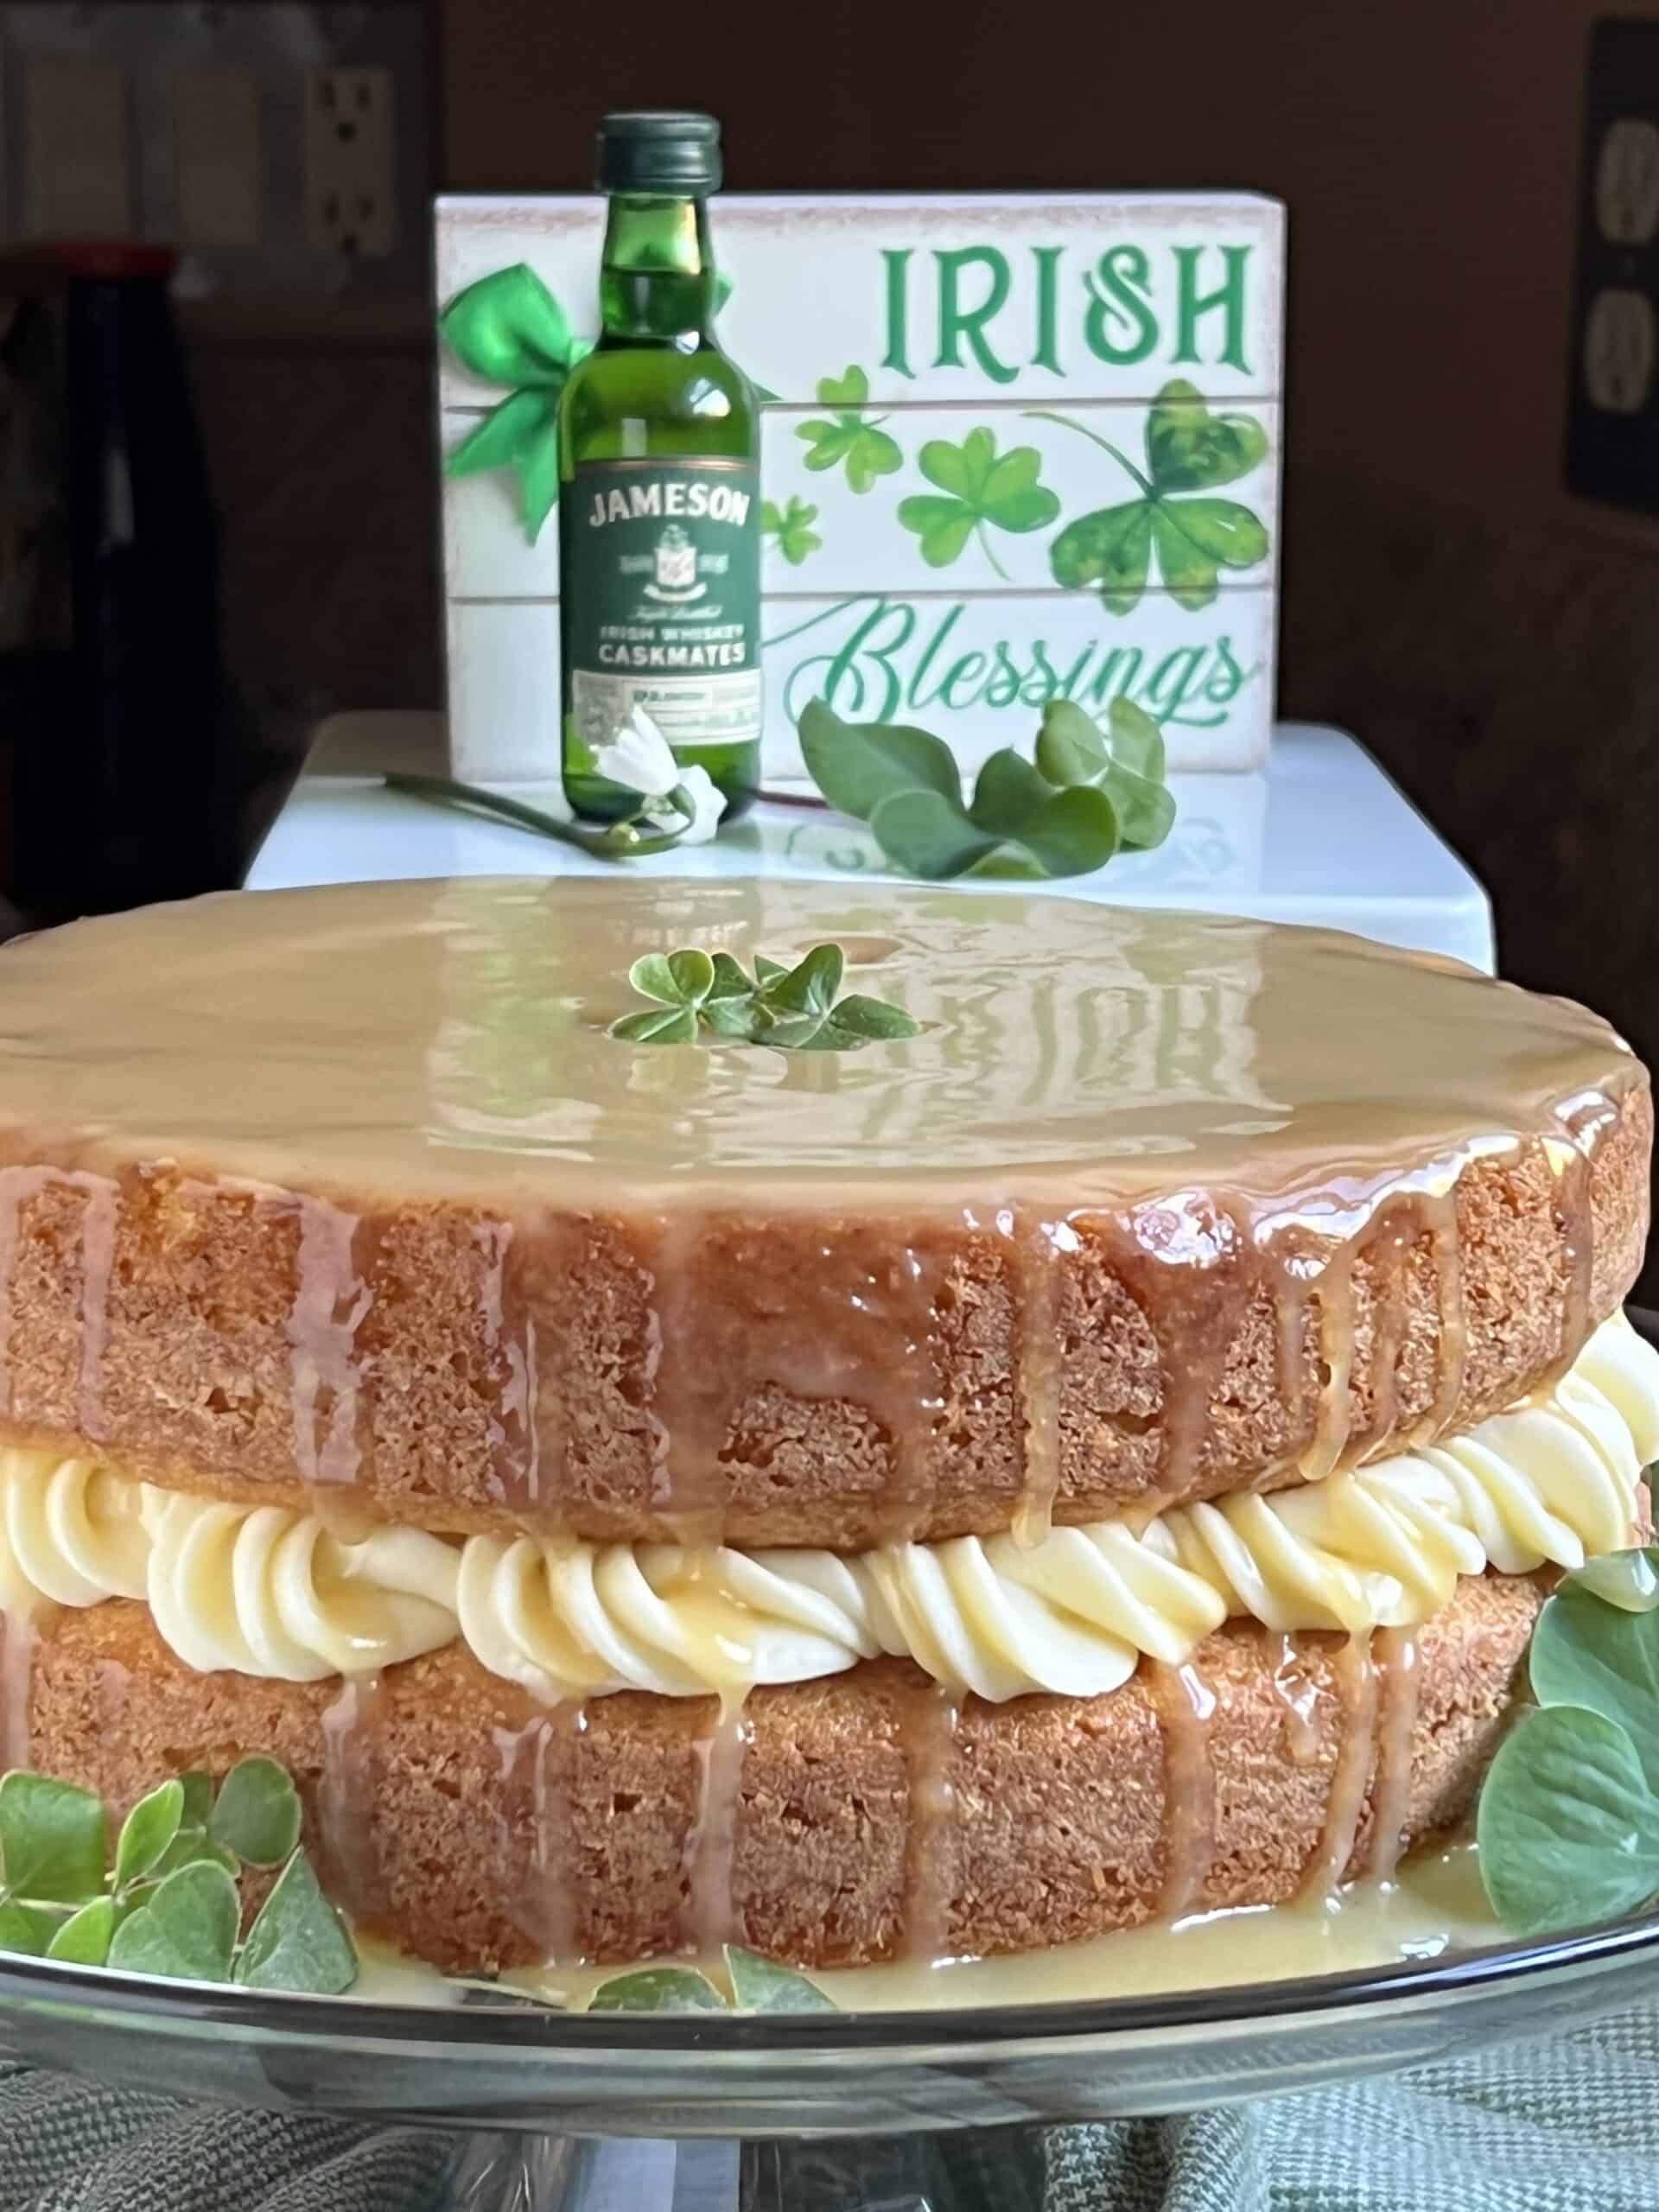 Irish blessings sign, Jameson's whiskey bottle and whiskey cake on plate